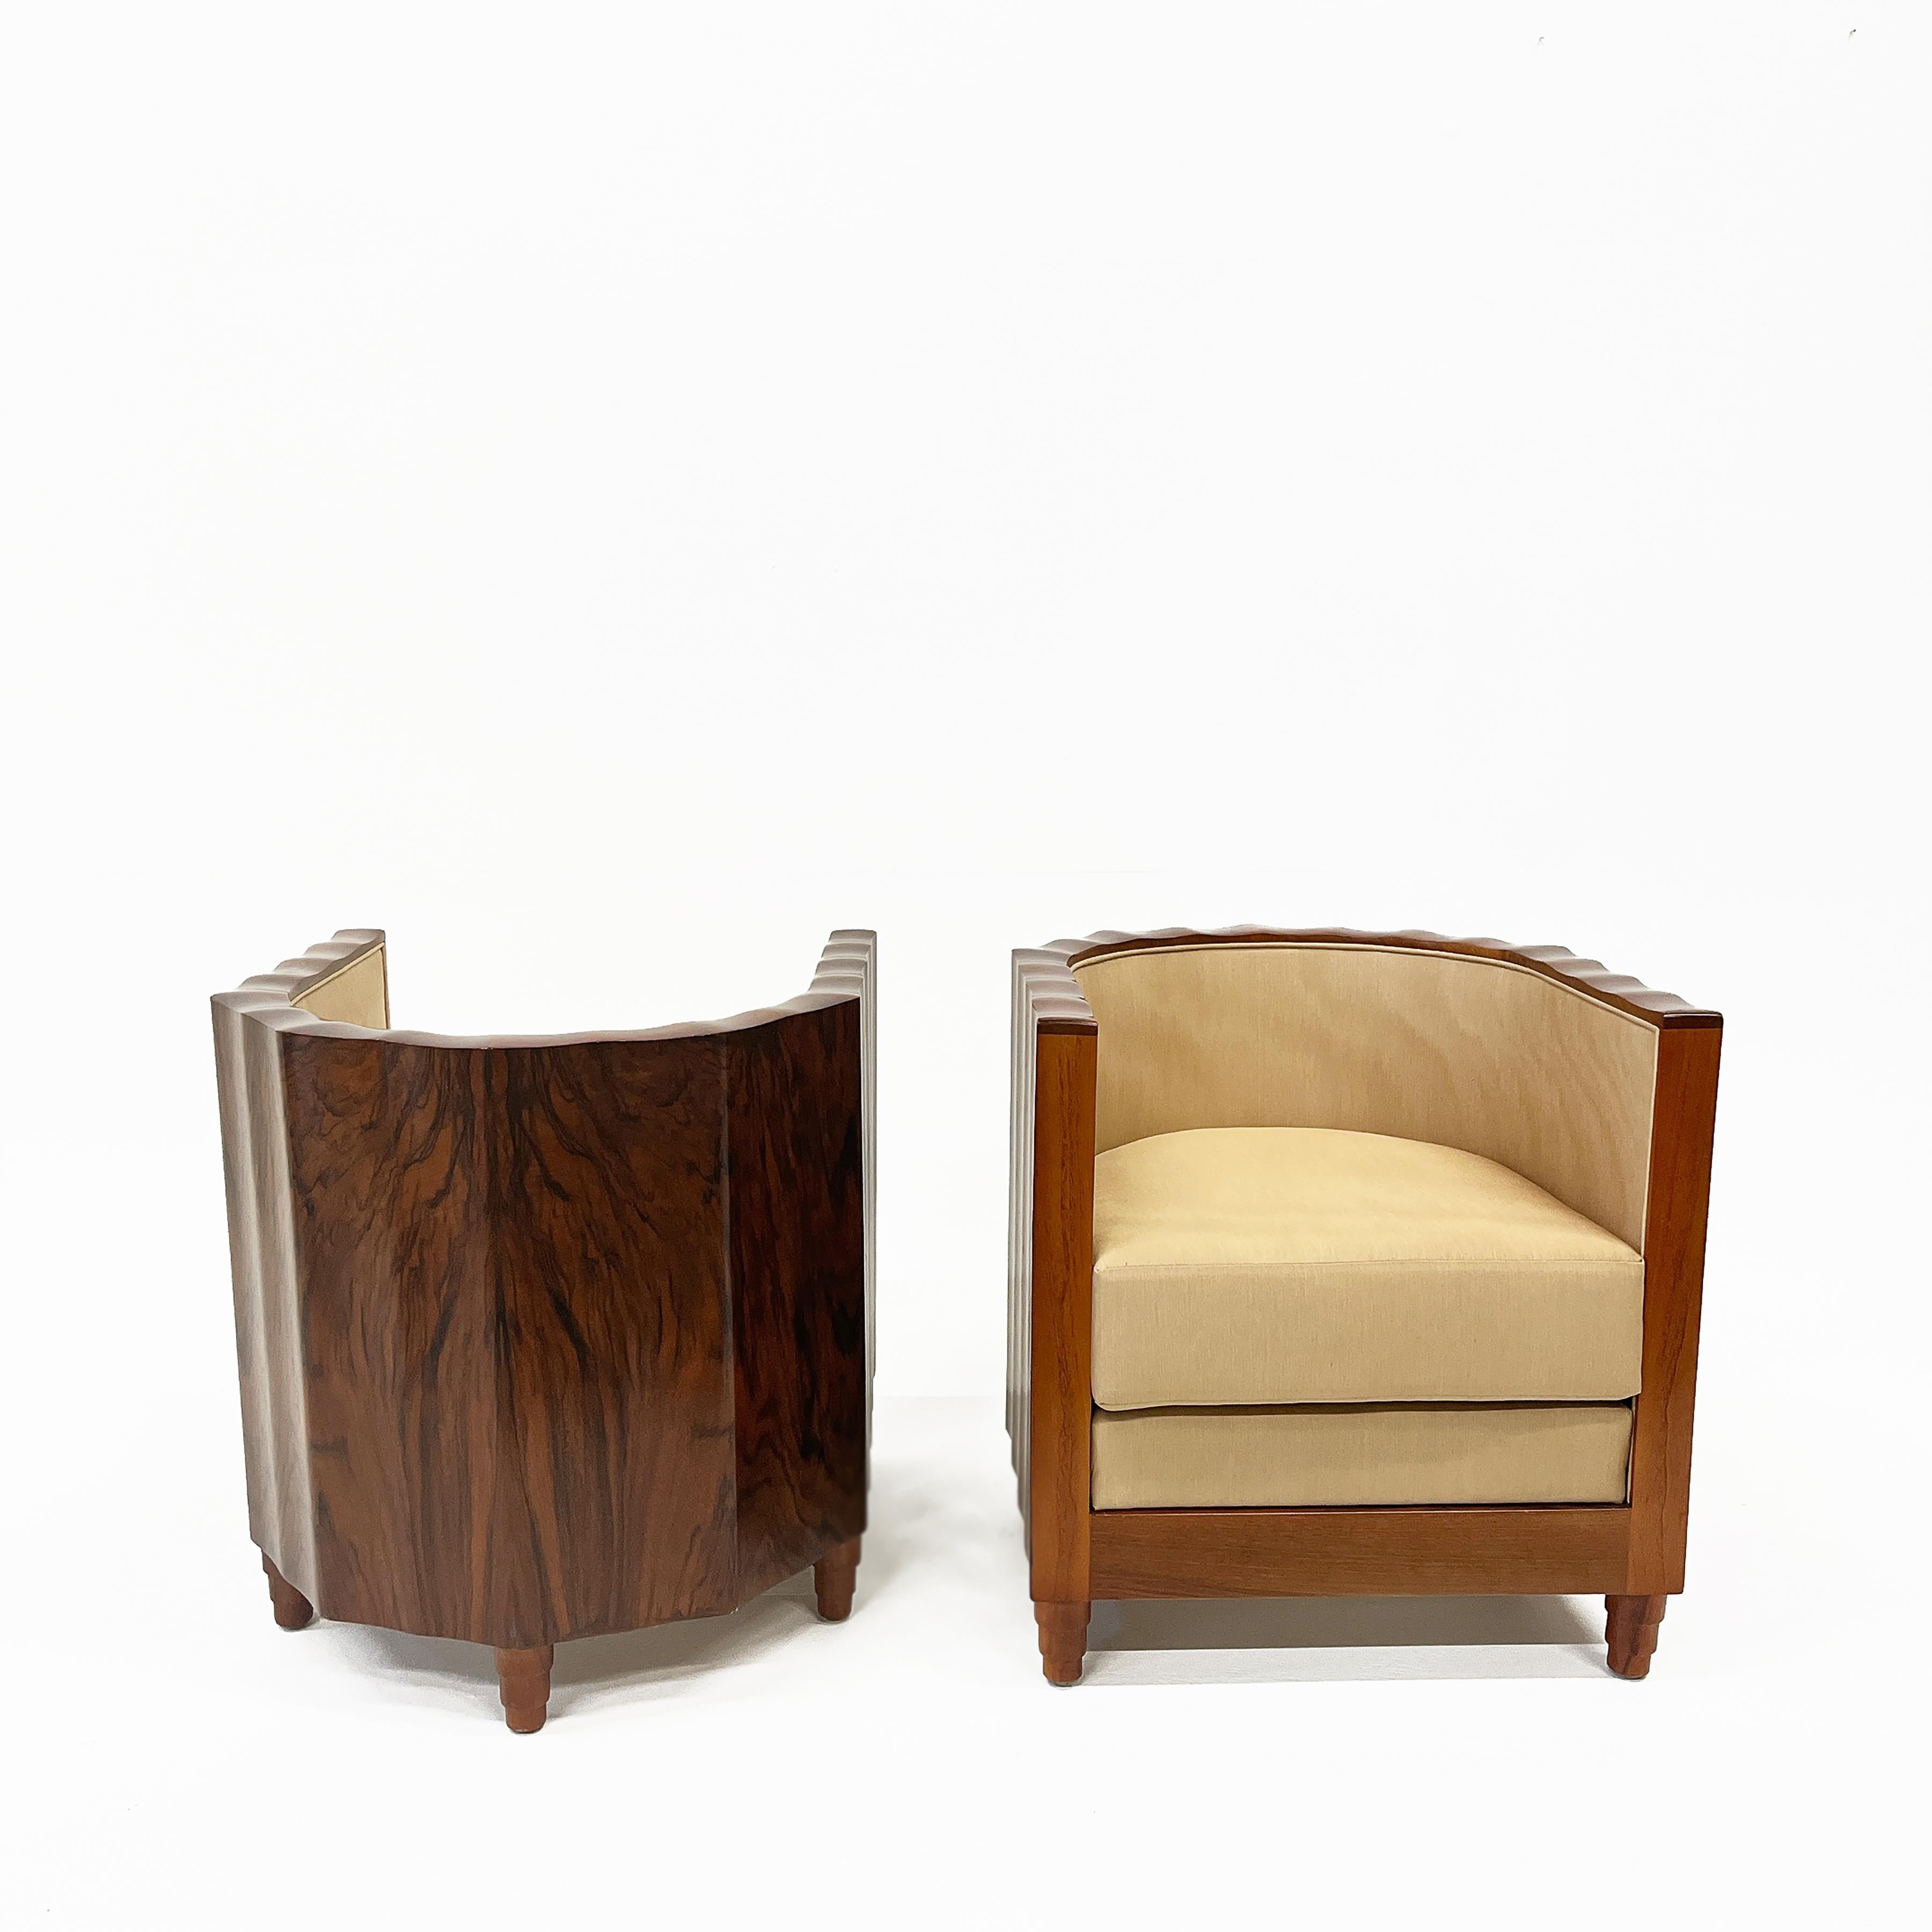 Art Deco Club Chairs, Austria 1930s For Sale 3